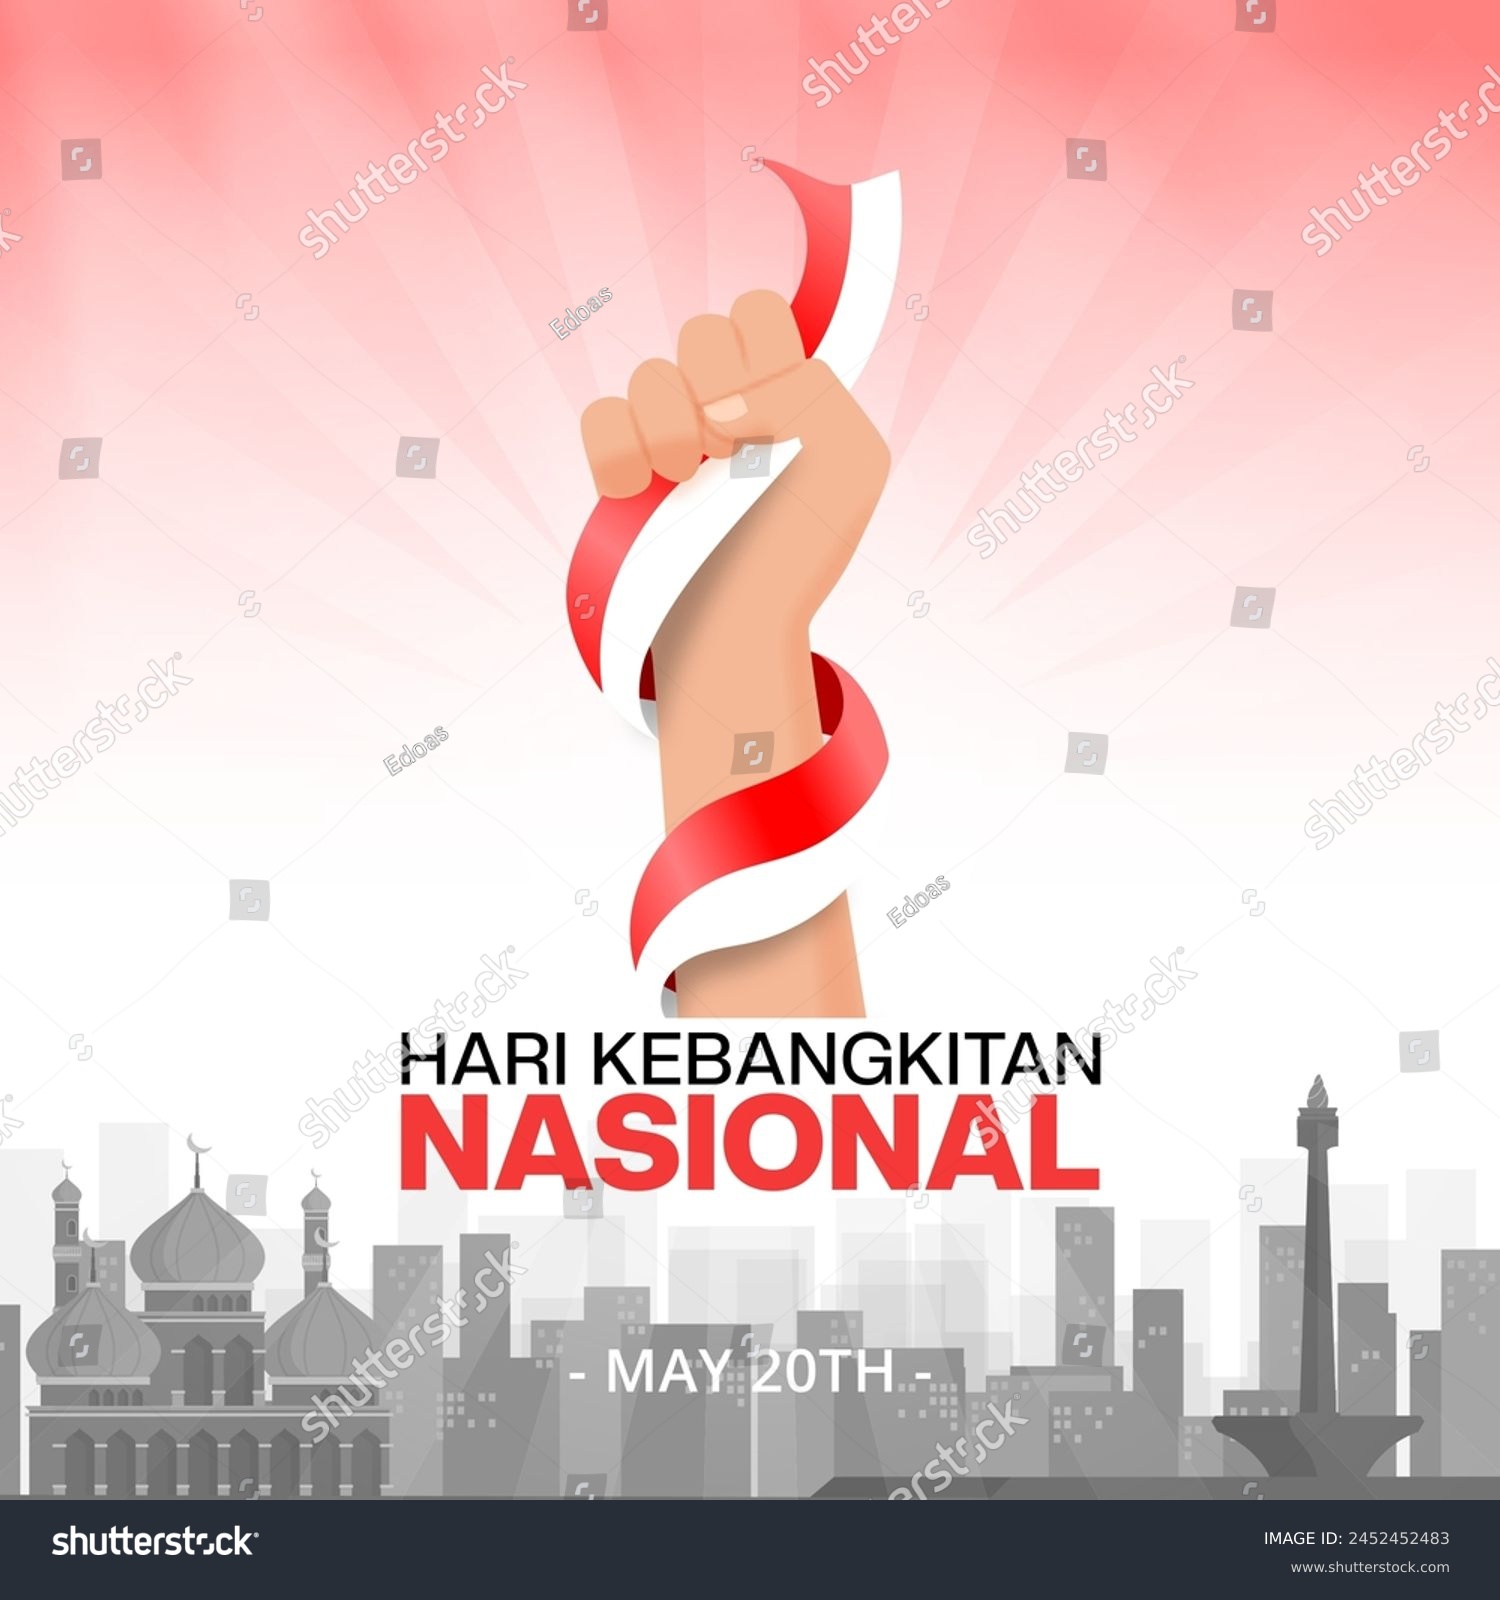 SVG of Hari Kebangkitan Nasional or Indonesian National Awakening Day with a hand and flag svg